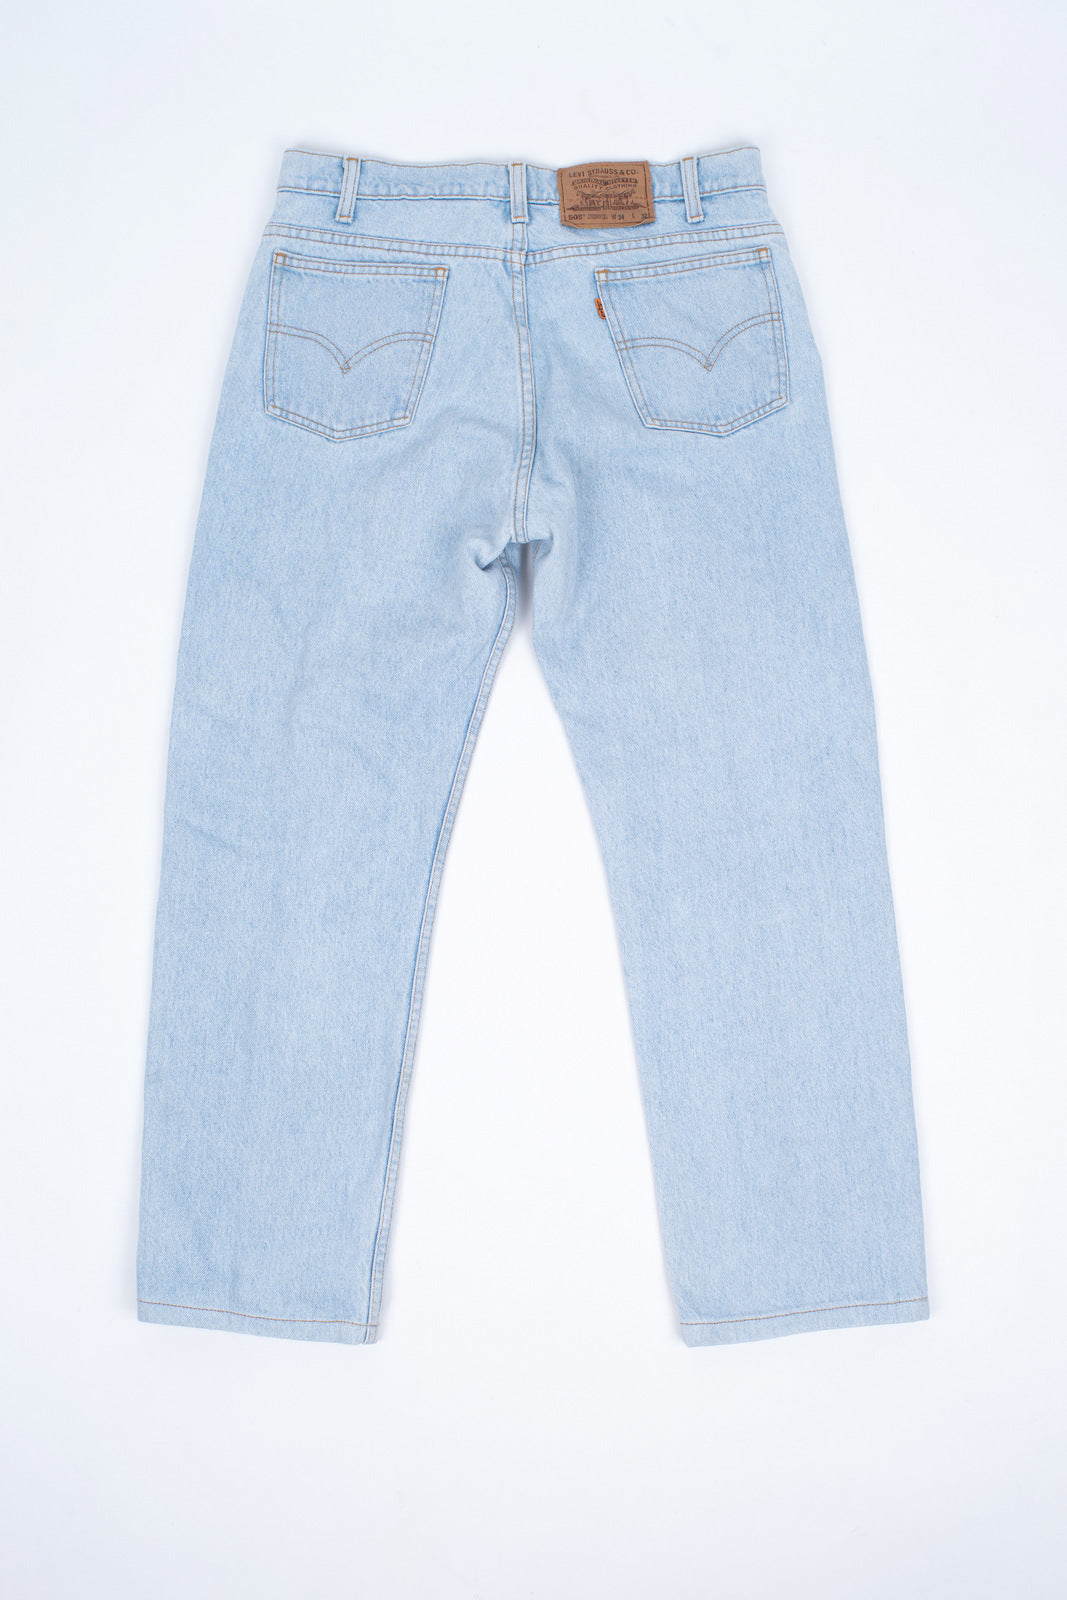 Levi's 505 Orange Tab Vintage Light Blue Jeans, W34/L28 – SecondFirst